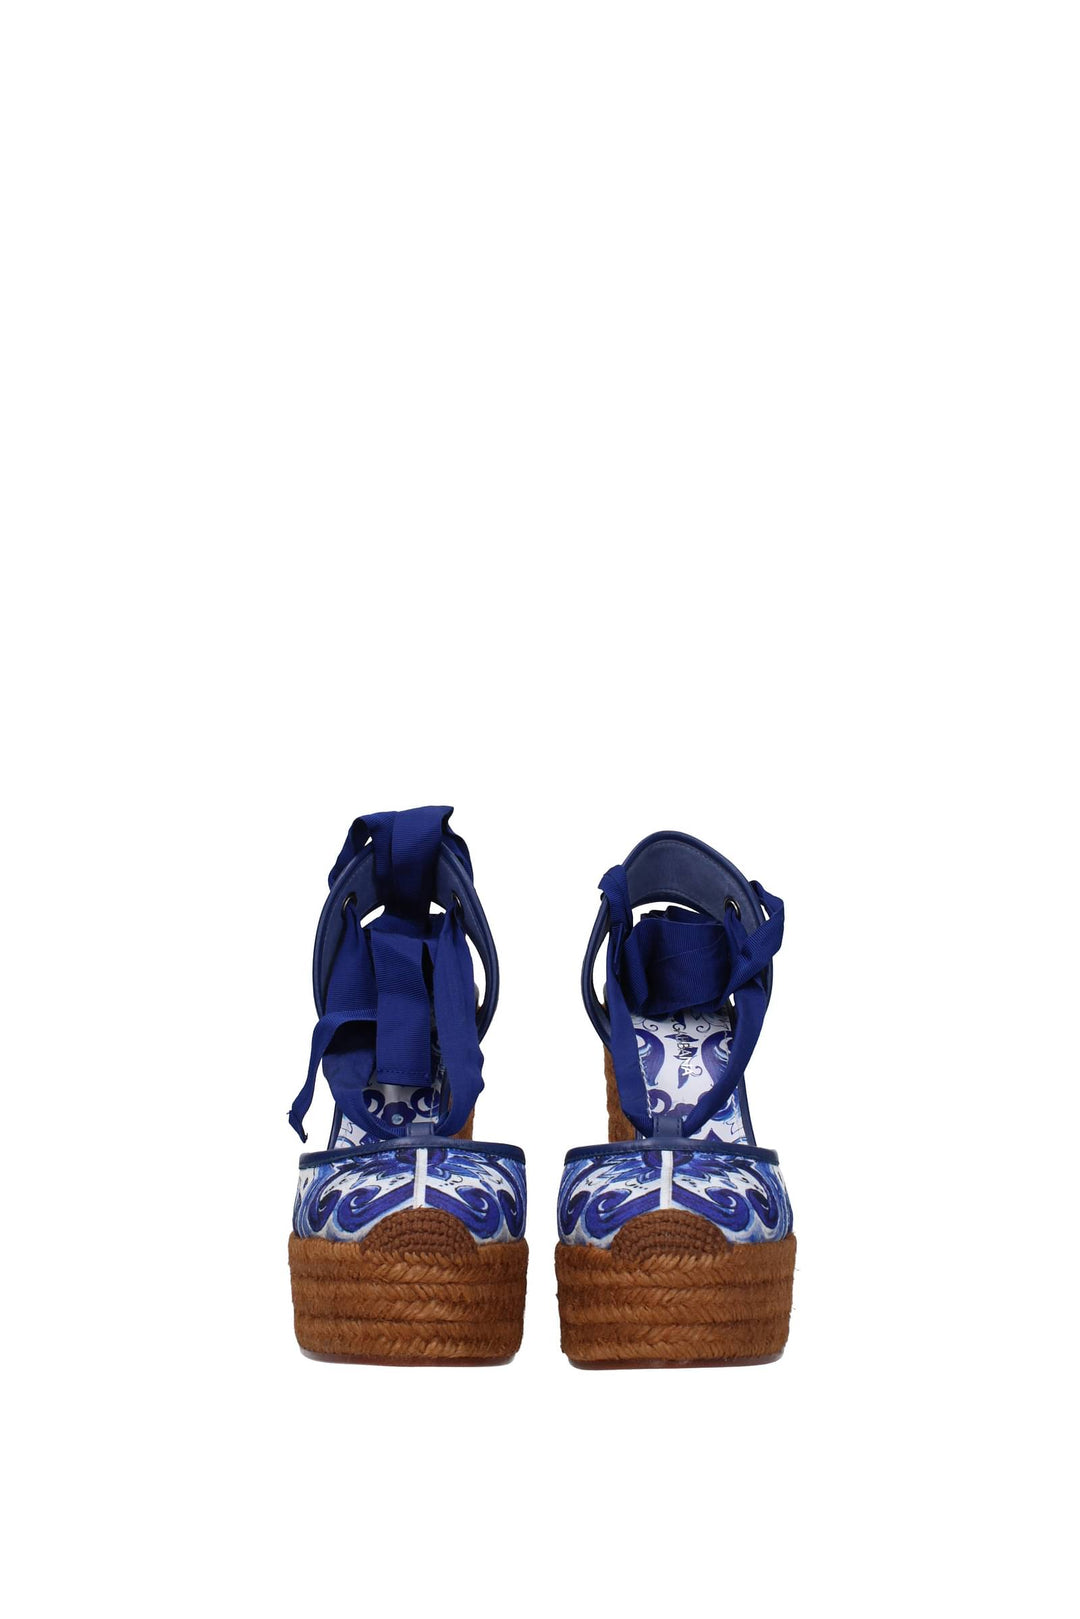 Dolce&Gabbana Zeppe lola Tessuto Blu